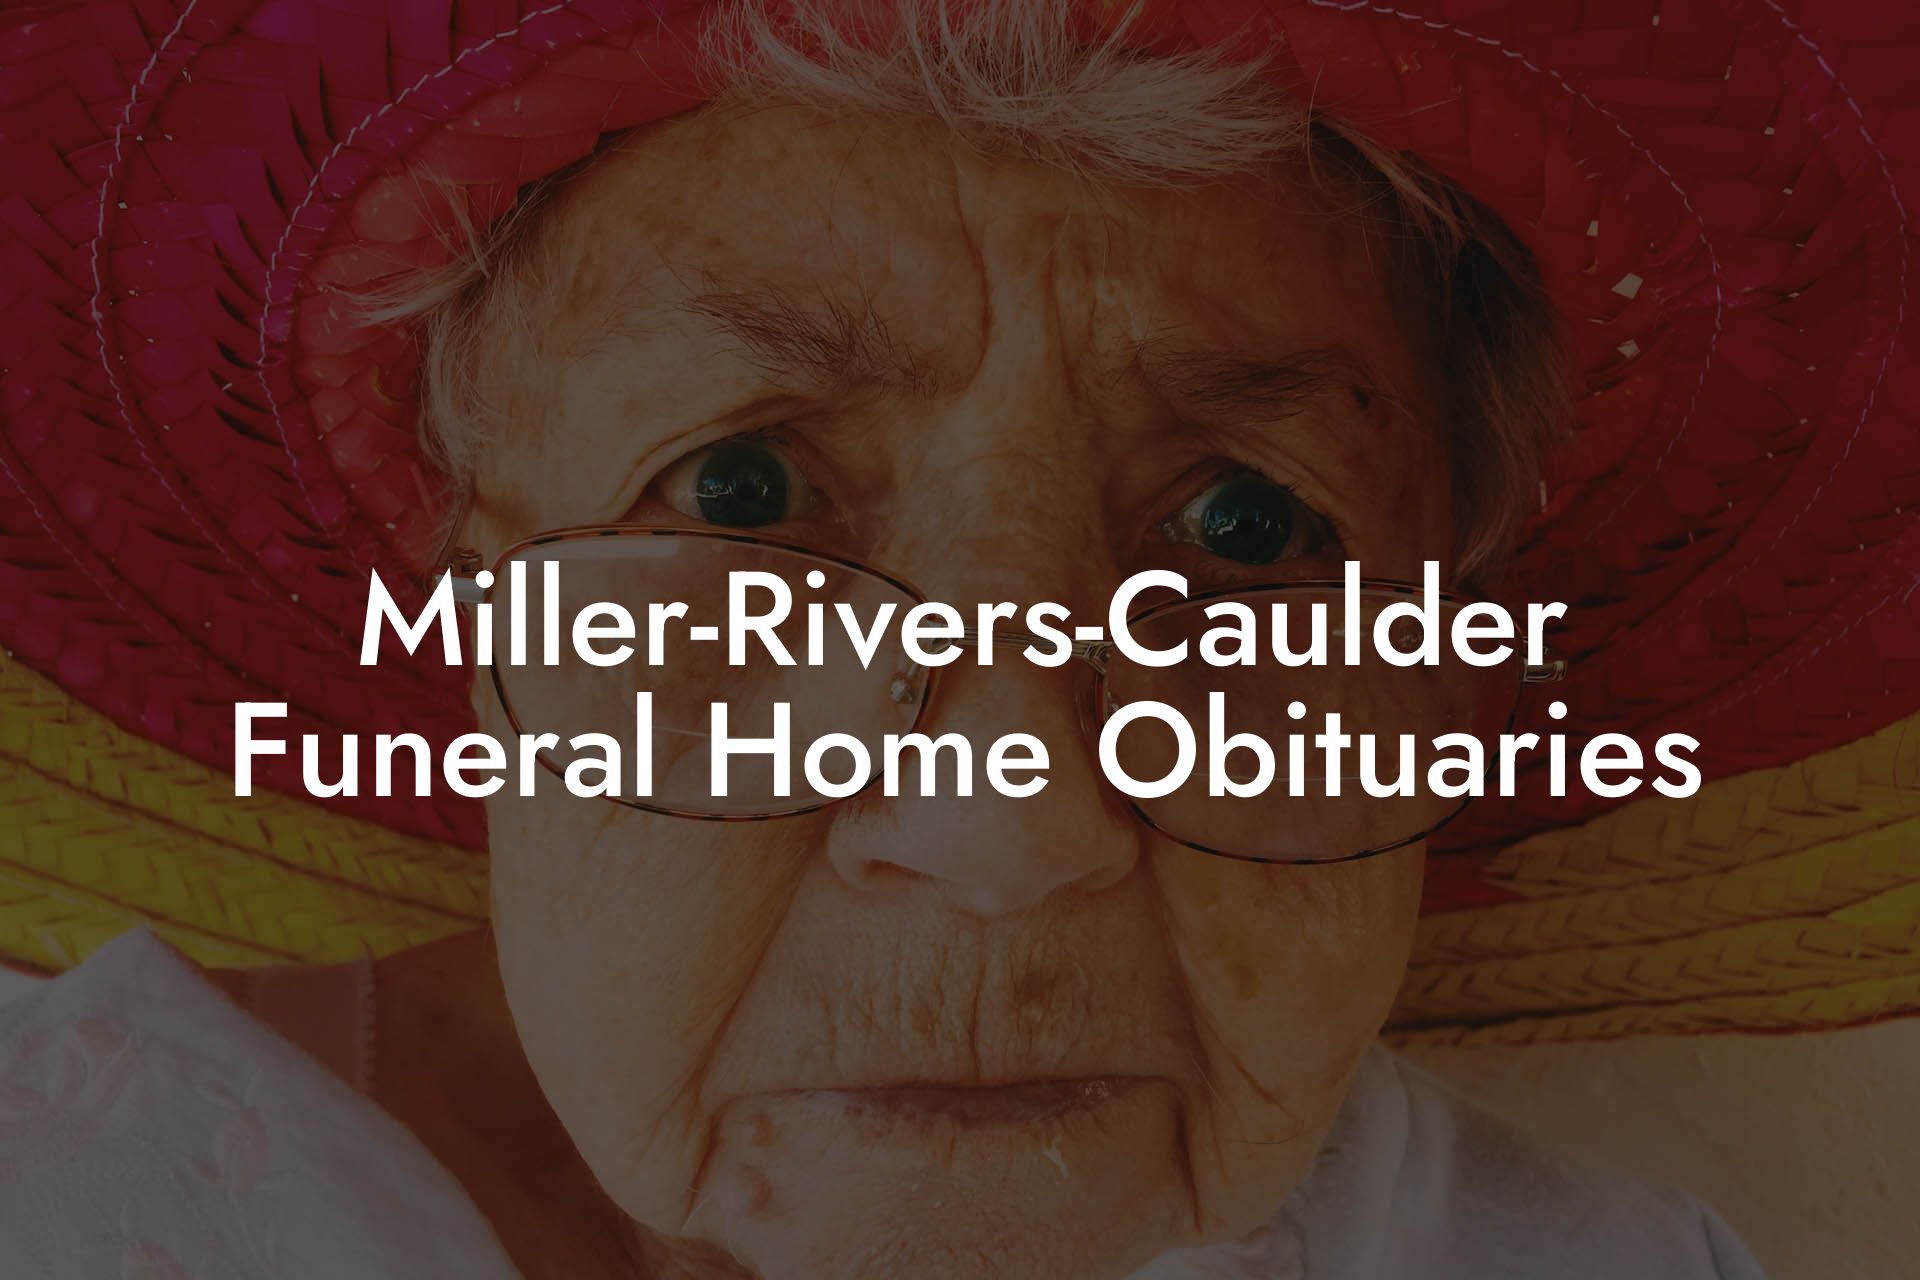 Miller-Rivers-Caulder Funeral Home Obituaries